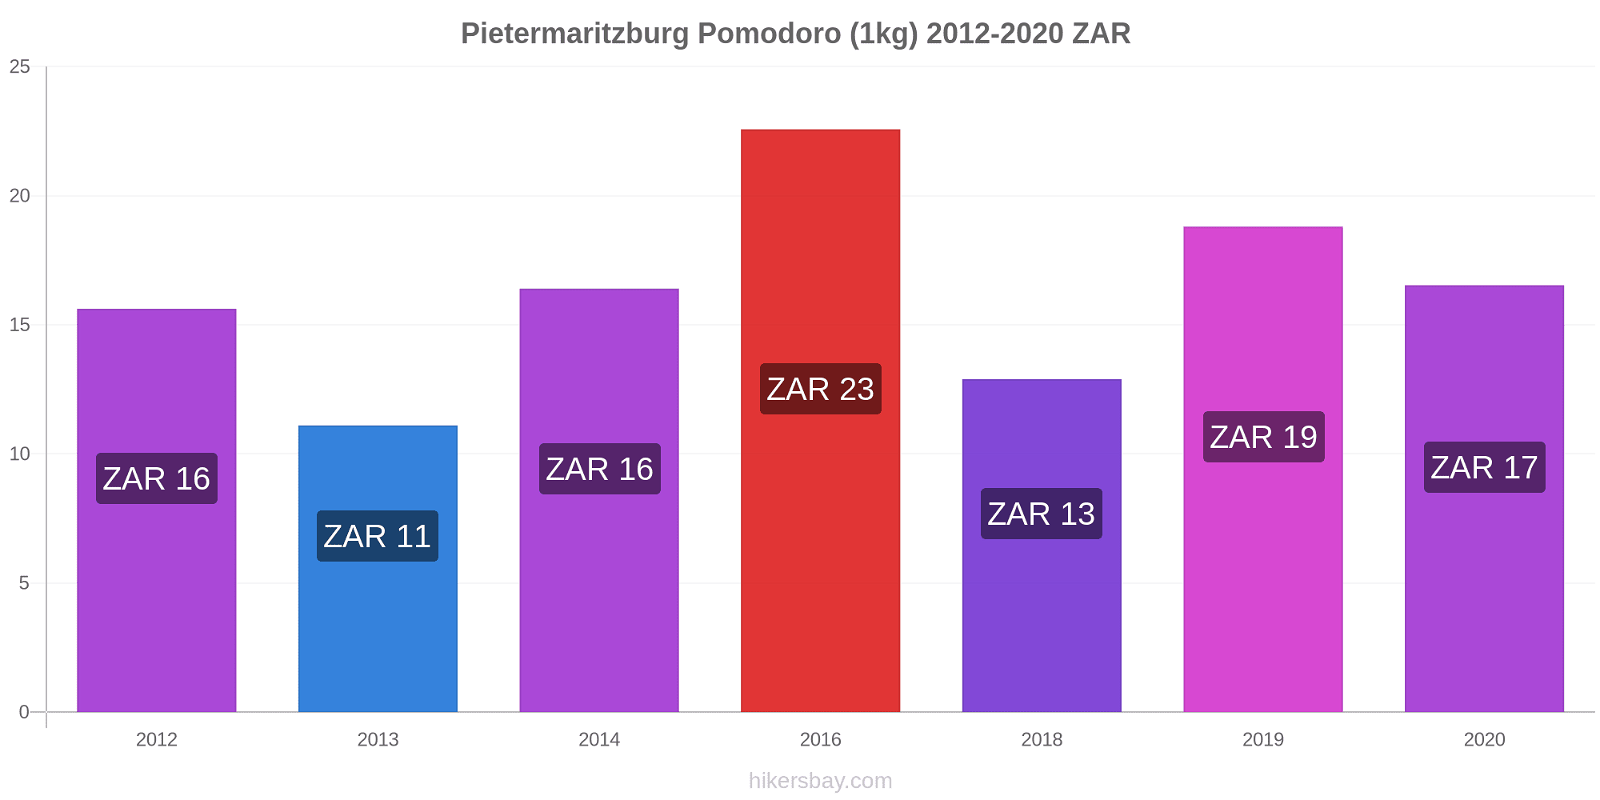 Pietermaritzburg variazioni di prezzo Pomodoro (1kg) hikersbay.com